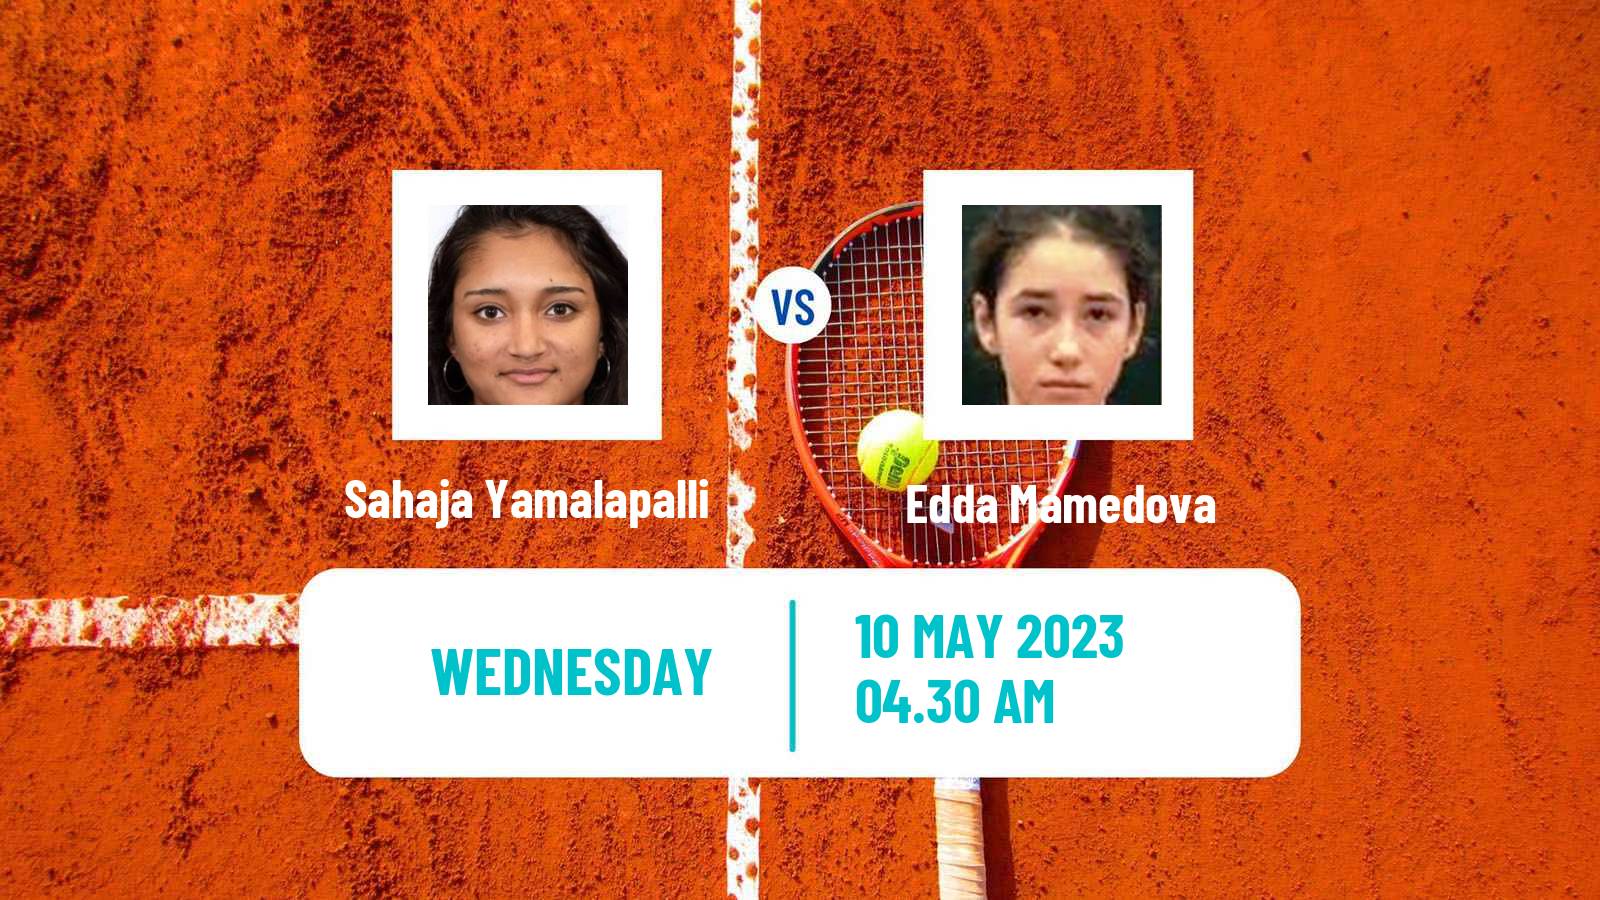 Tennis ITF Tournaments Sahaja Yamalapalli - Edda Mamedova